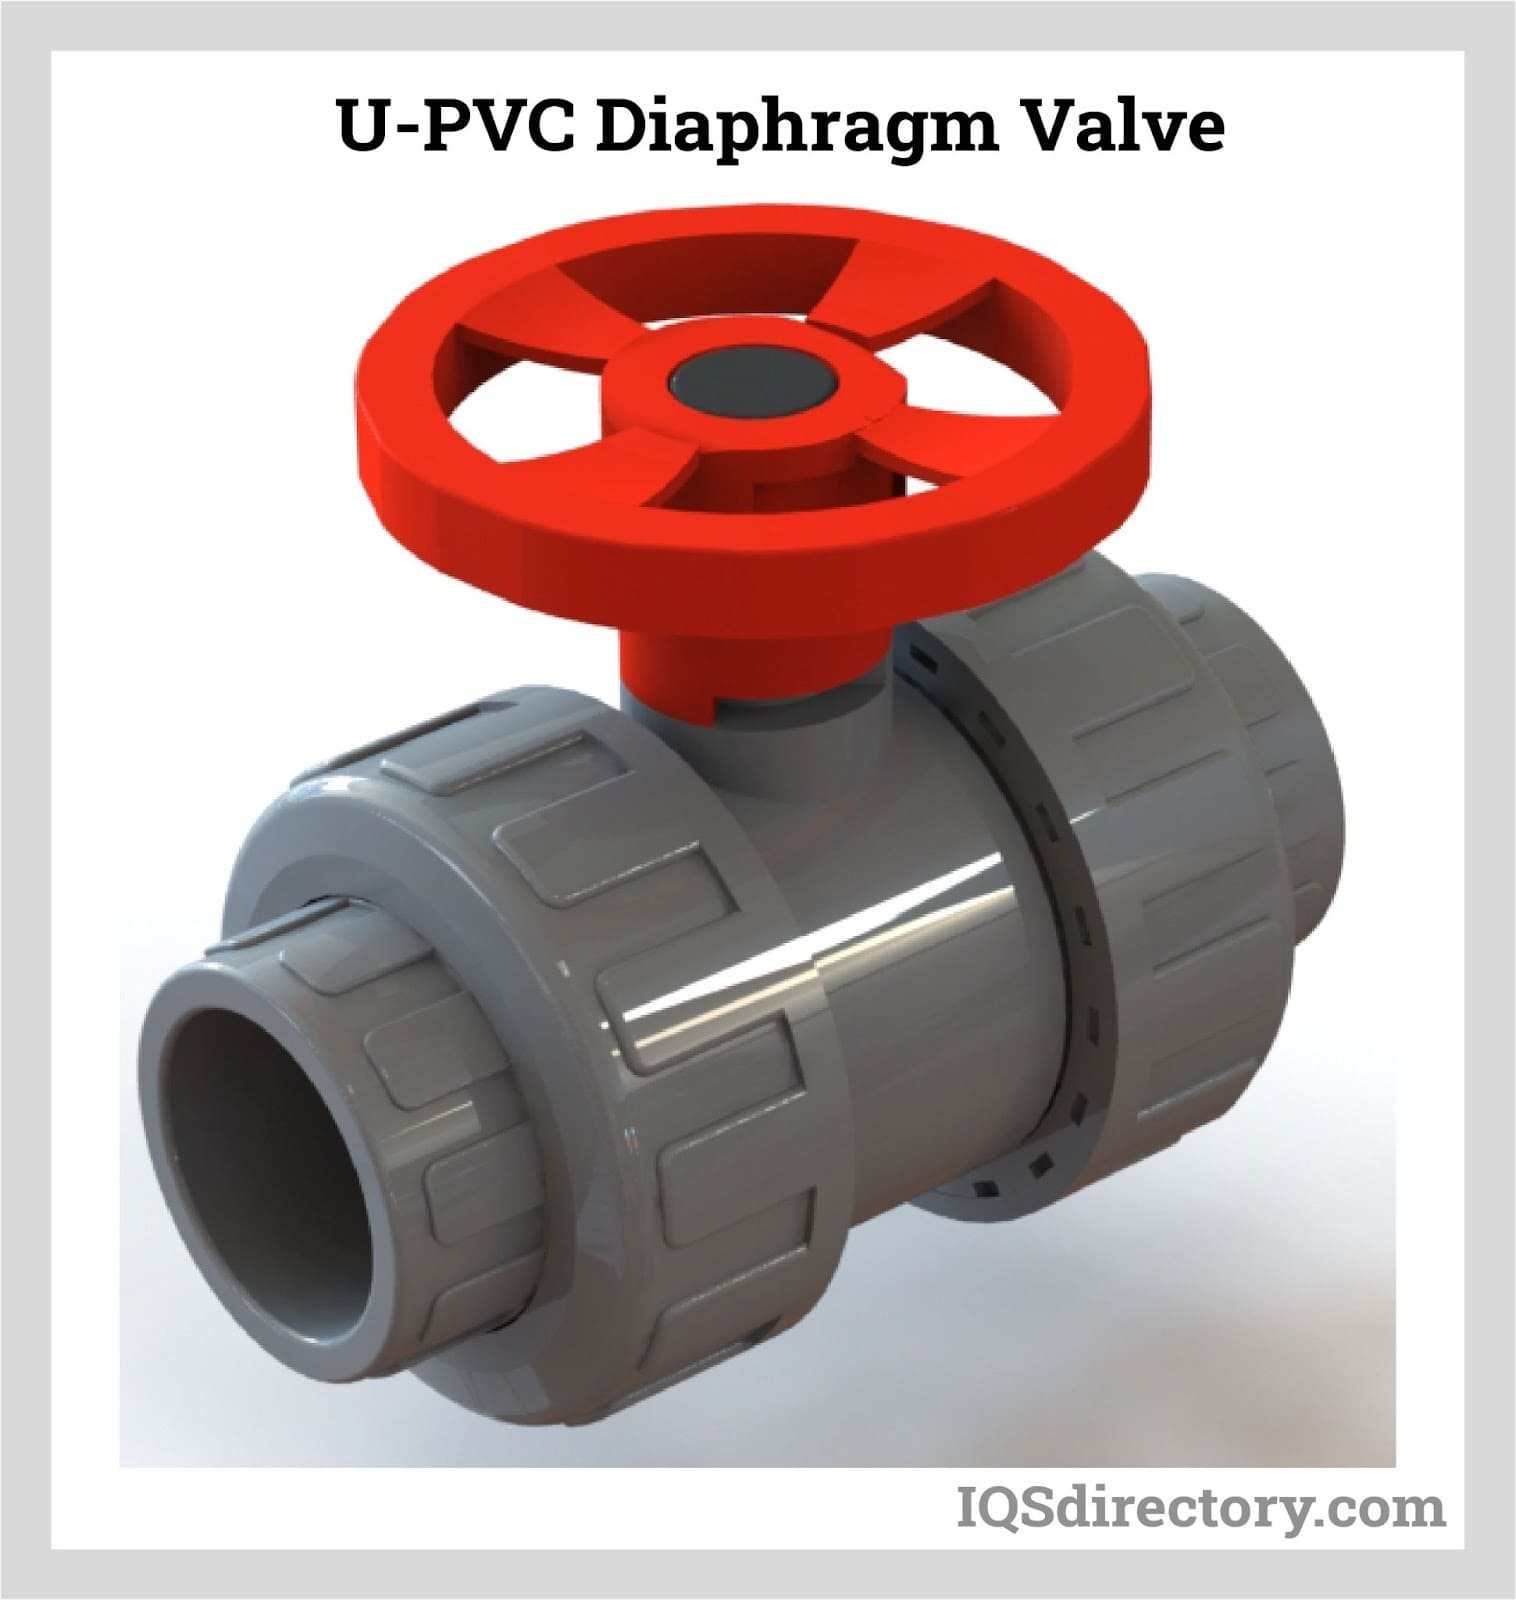 U-PVC Diaphragm Valve